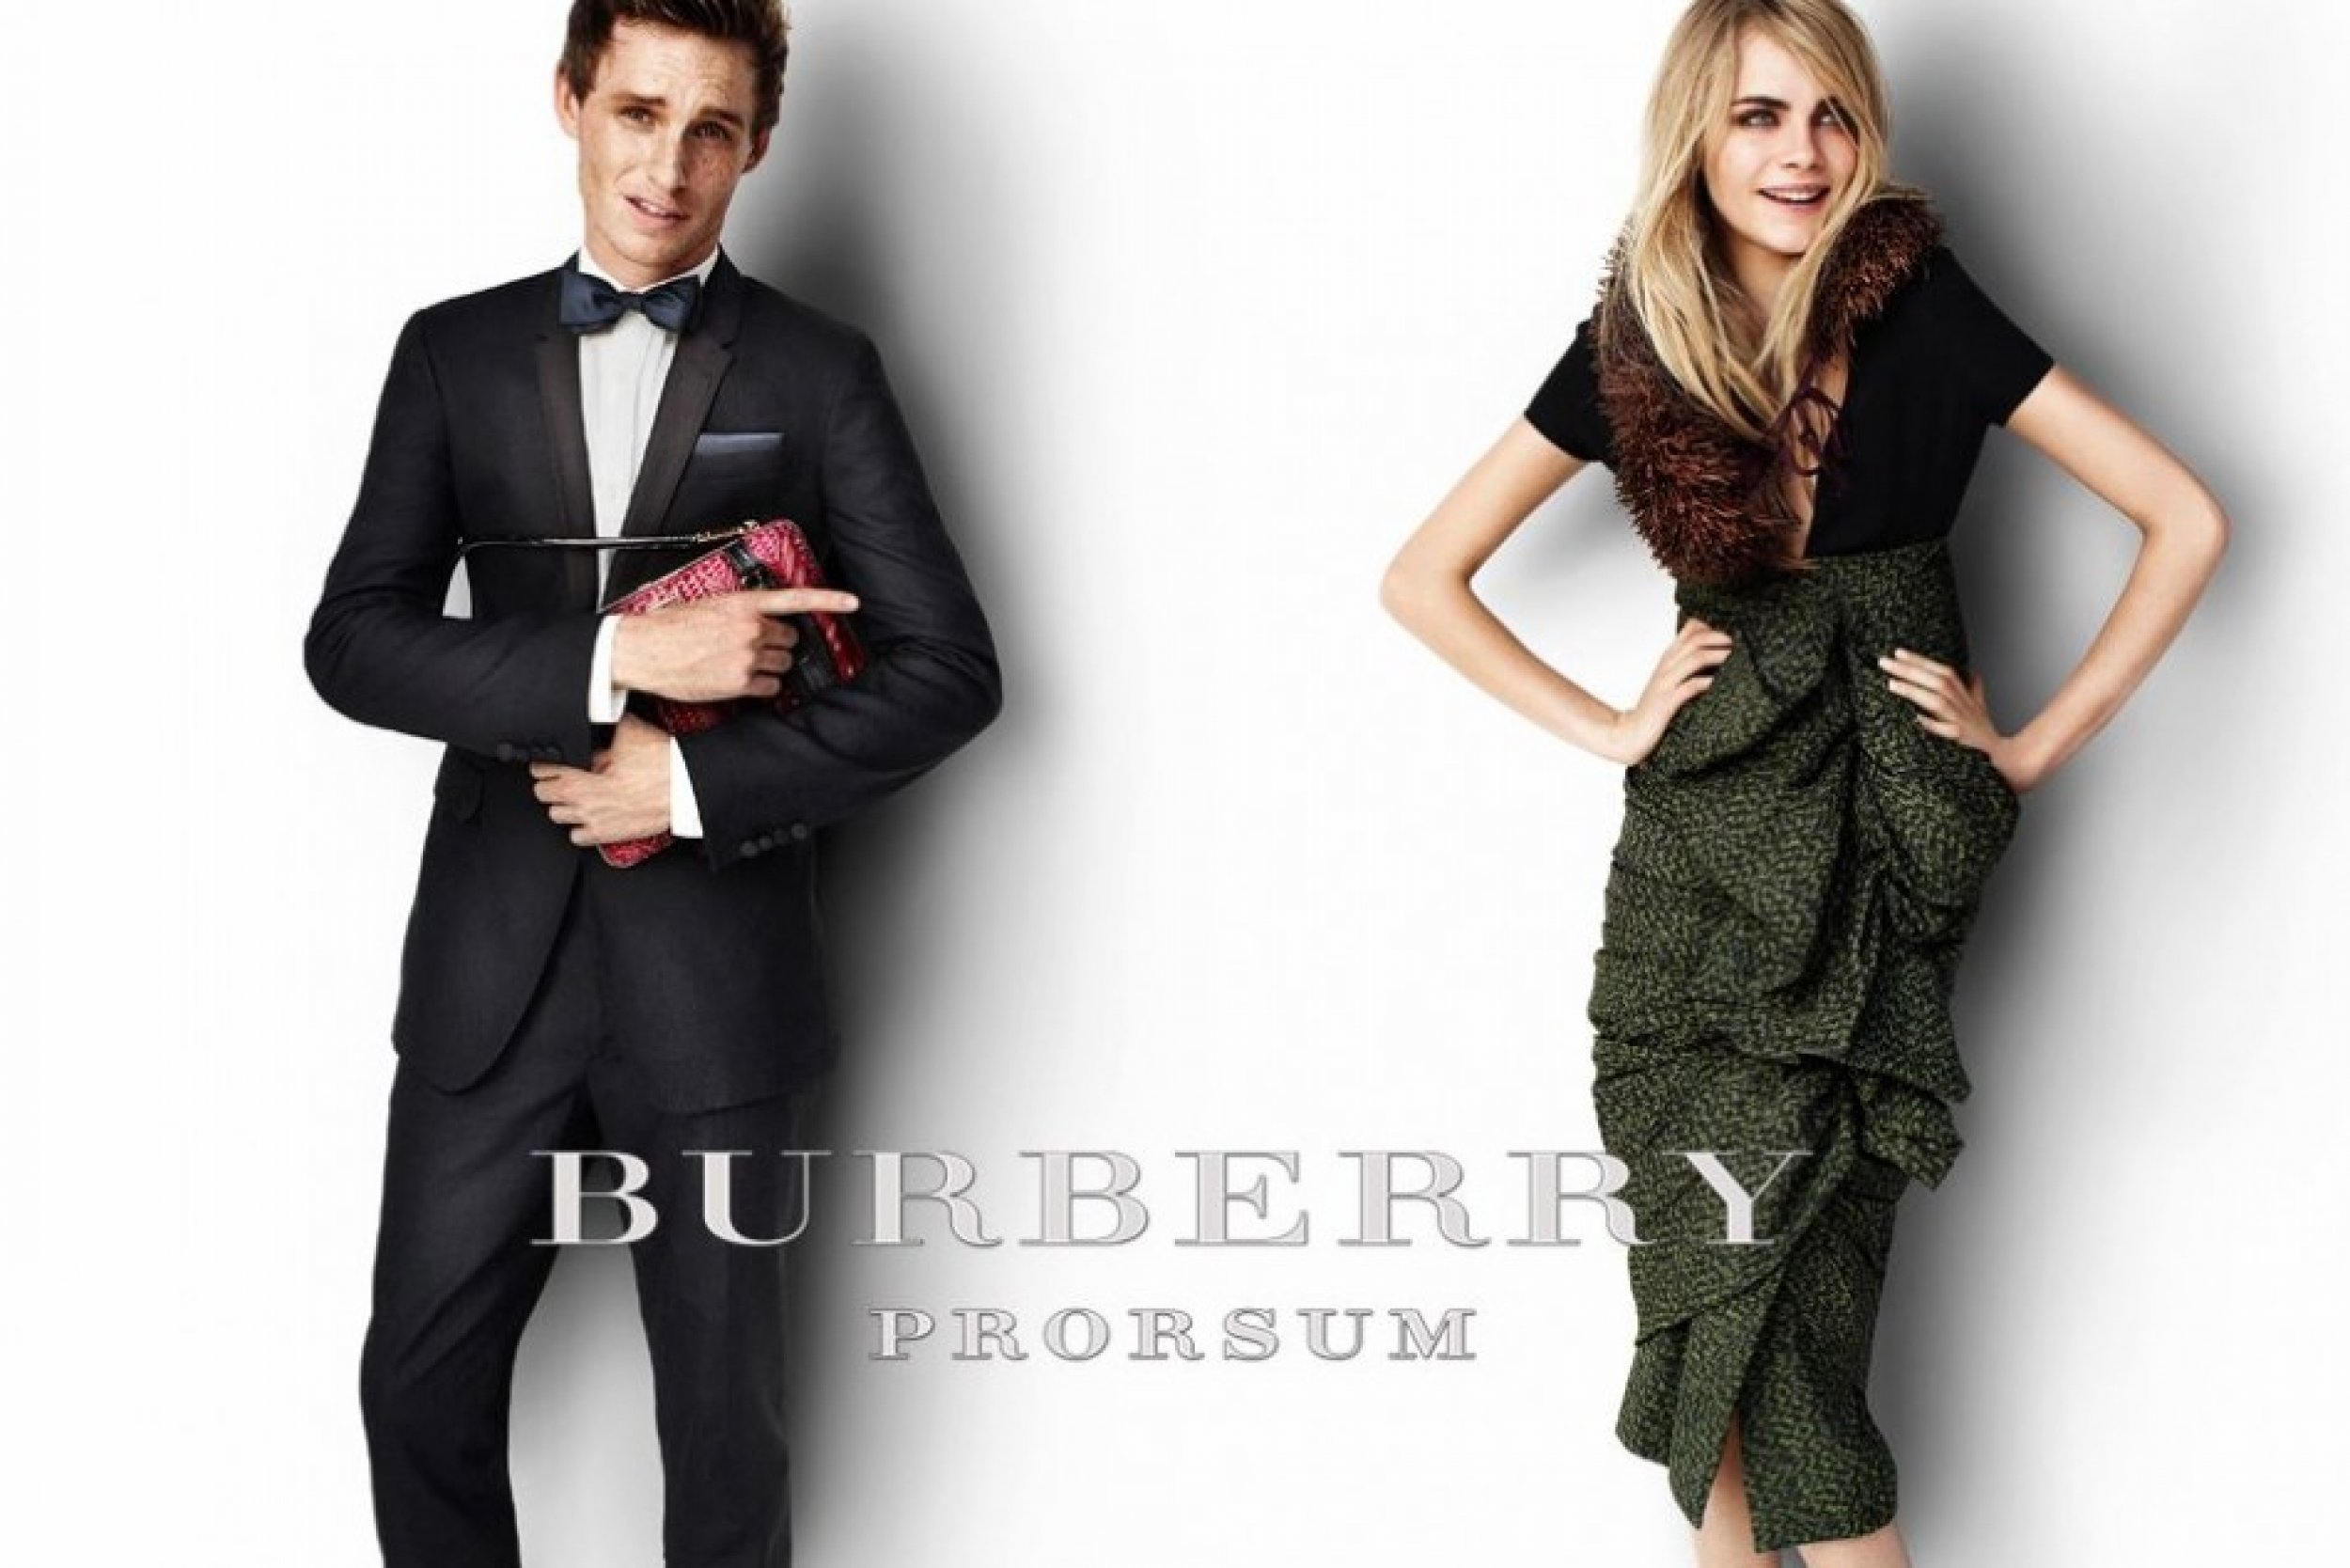 Burberry Beats Dior as Facebooks Top Fashion Brand 